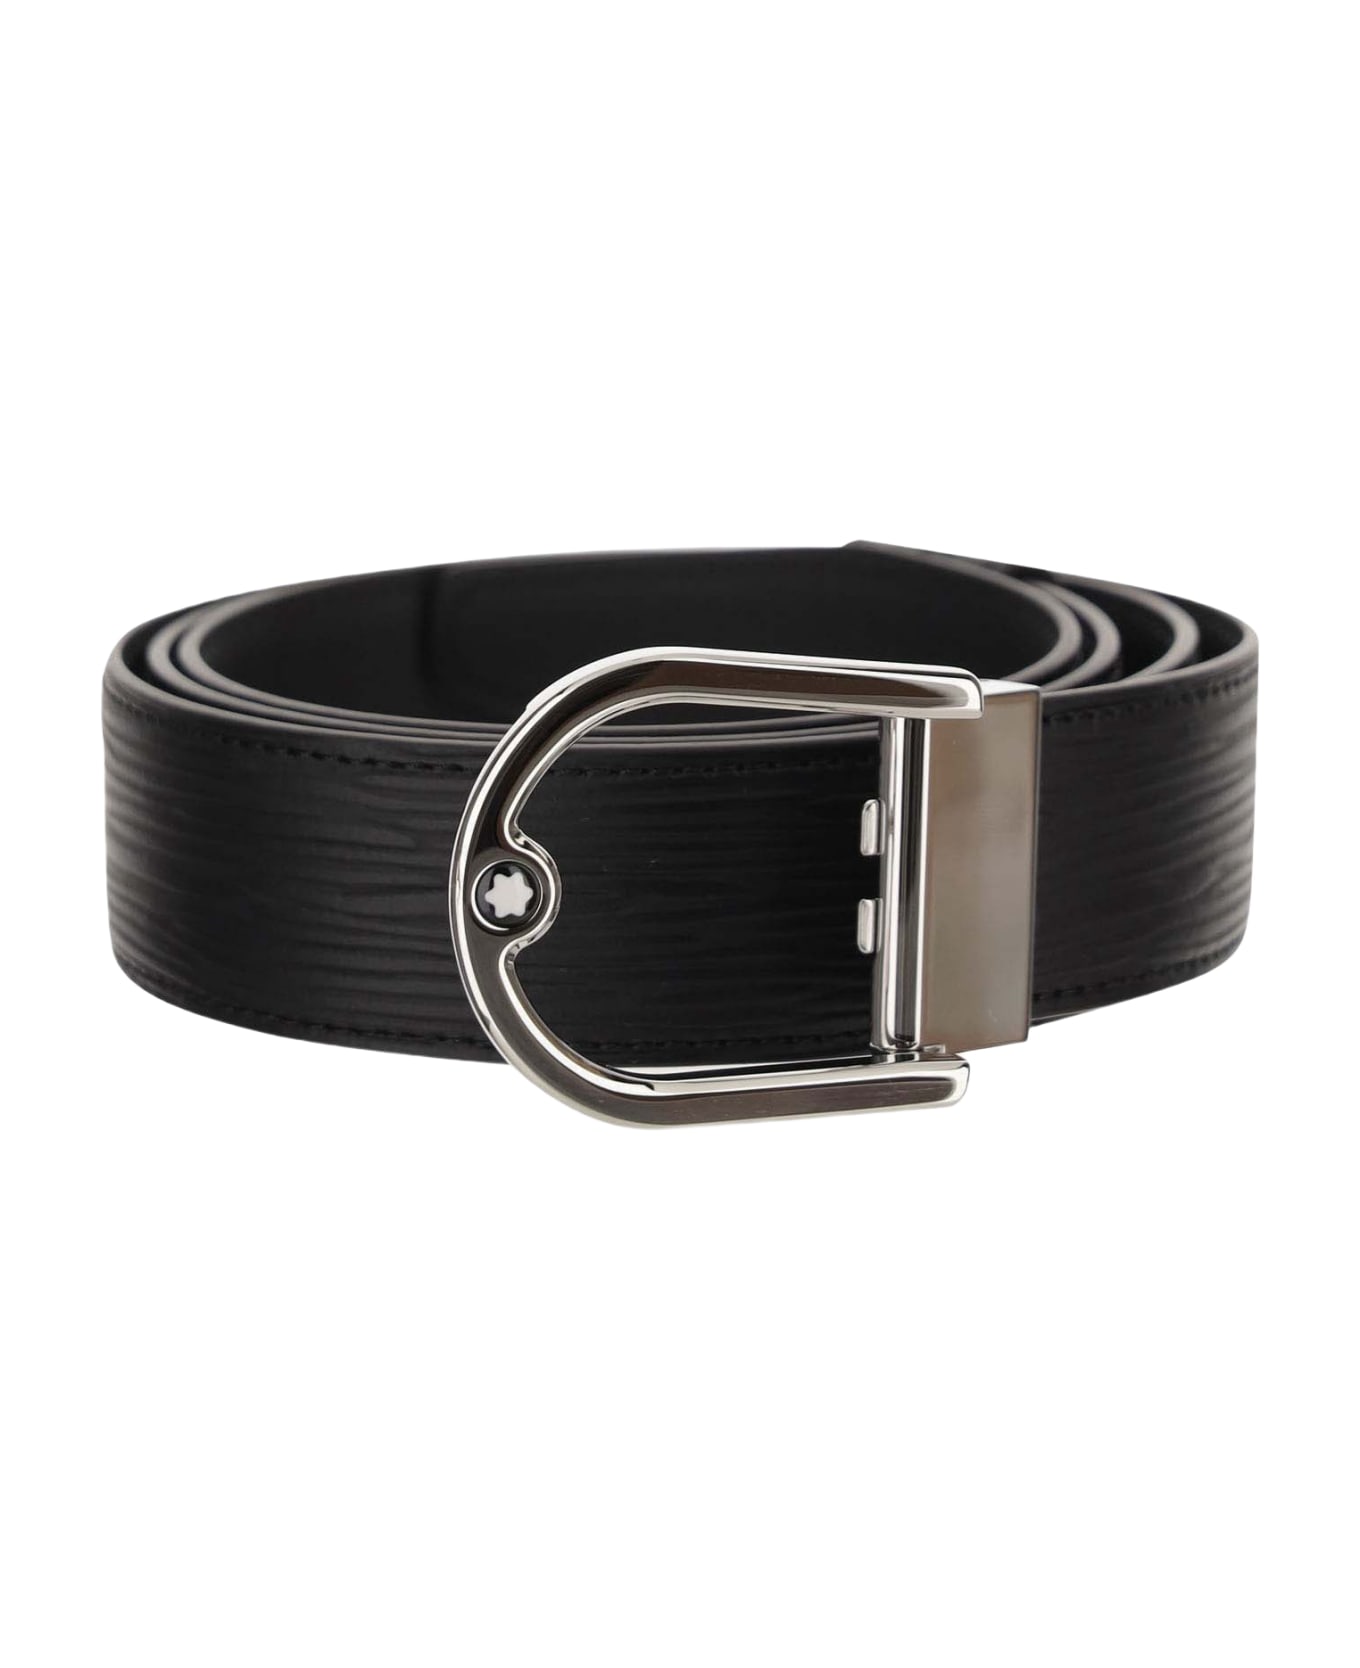 Montblanc 35 Mm Belt With Reversible Horseshoe Buckle - Black